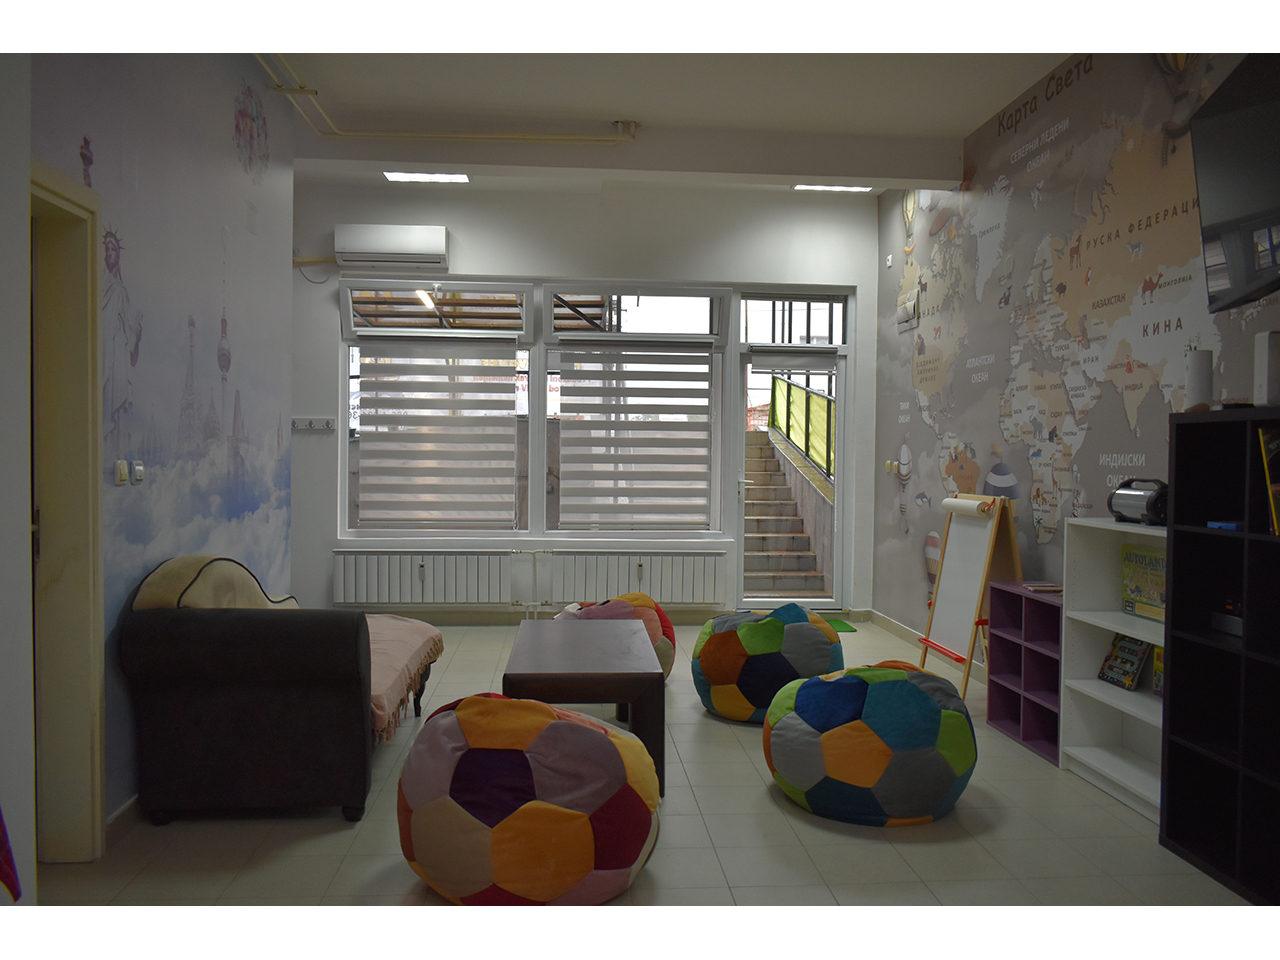 Photo 3 - MALO ZVONCE - EXTENDED STAY FOR CHILDREN Extended daycare for children Belgrade